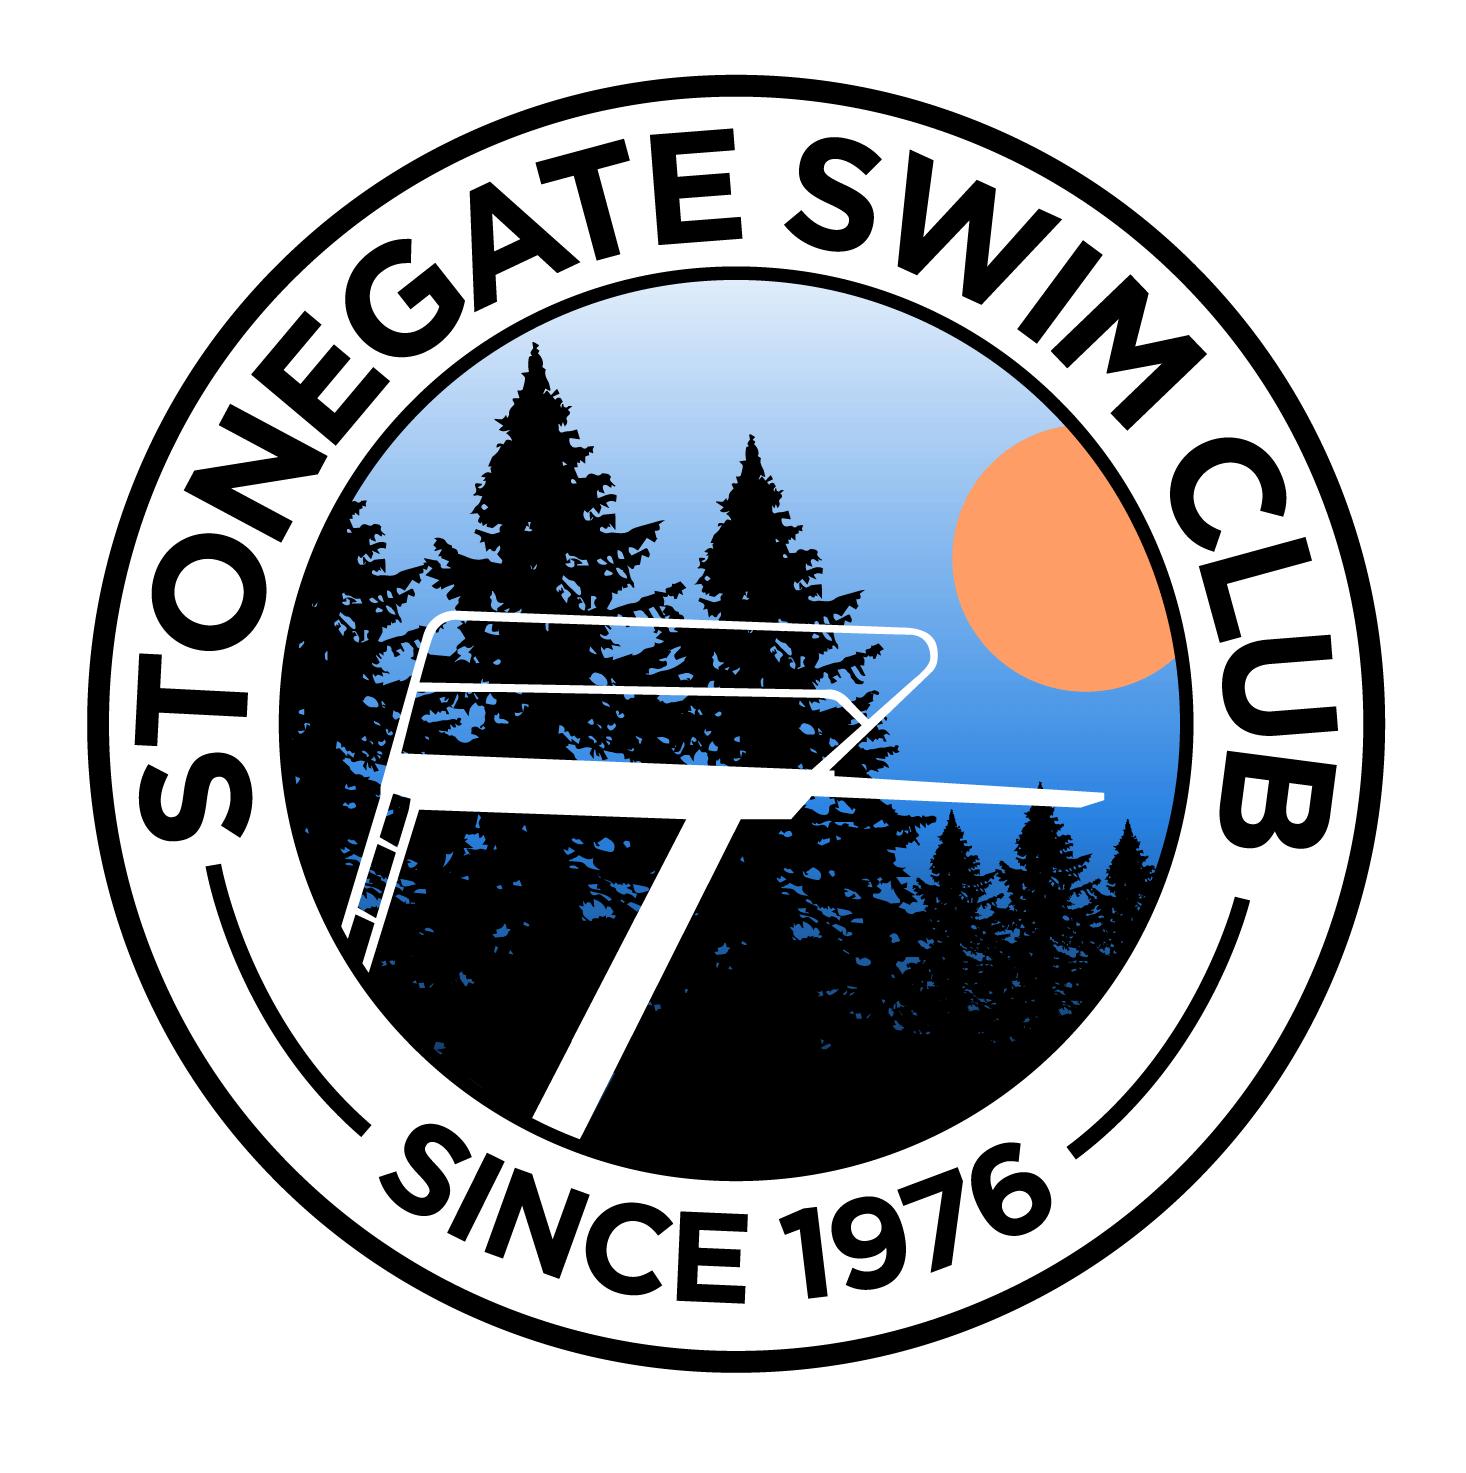 Stonegate Swim Club